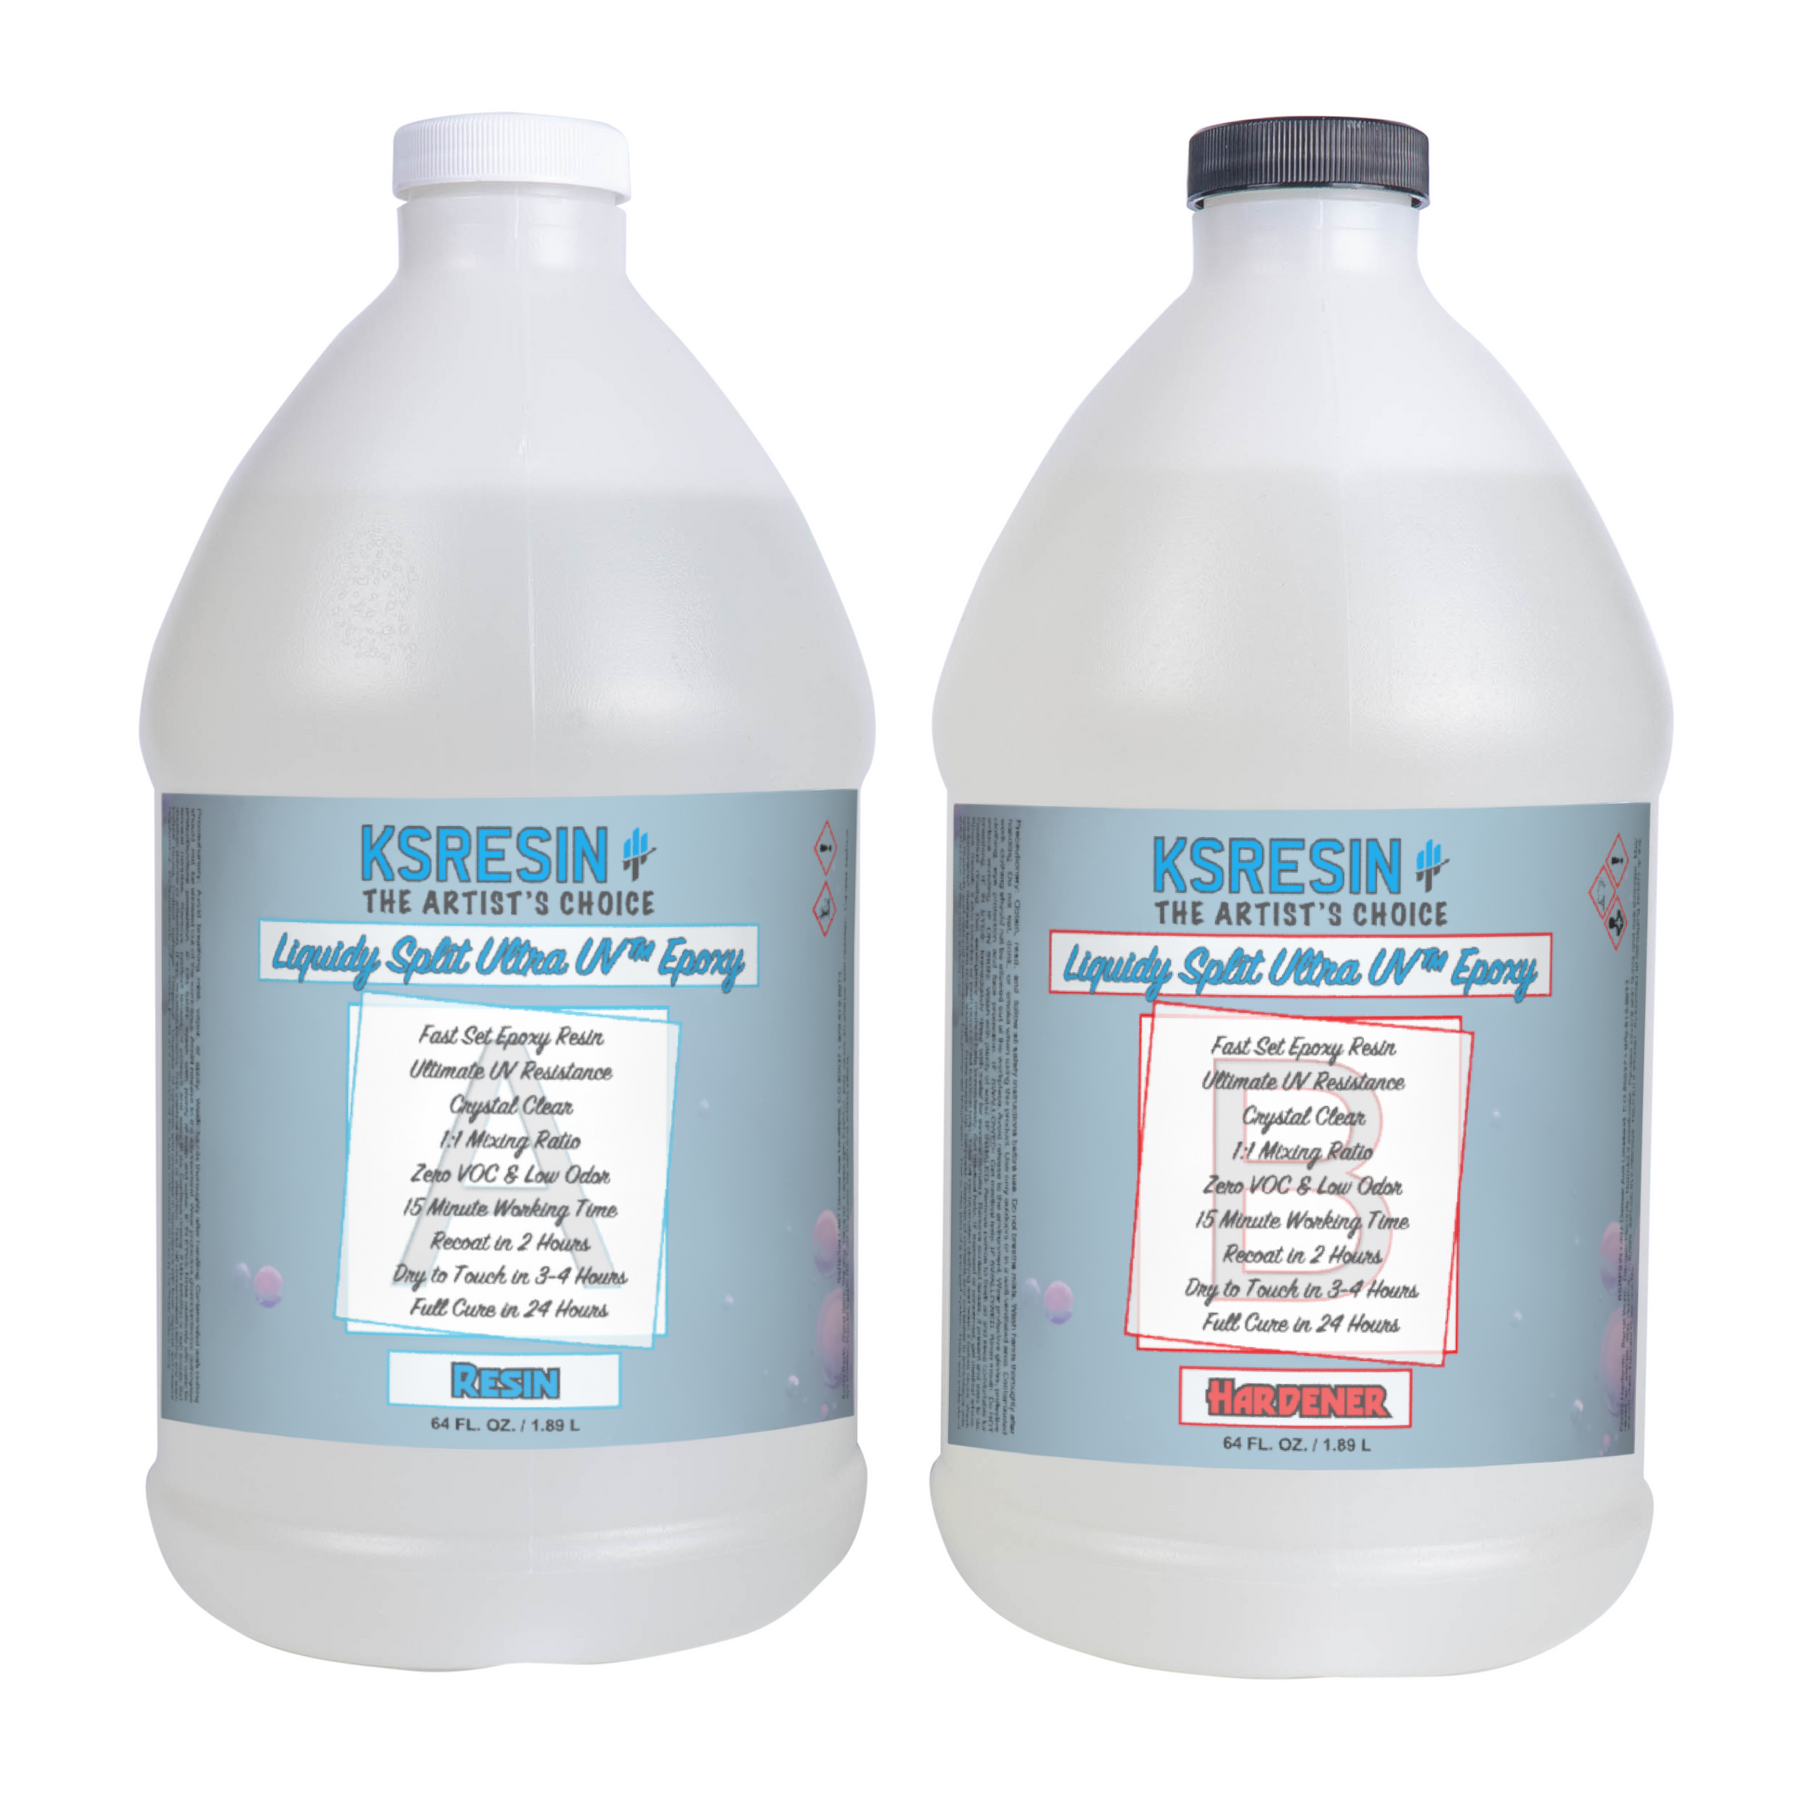 Epoxy Resin Clear Casting Liquid for Art - 1 Gallon Set